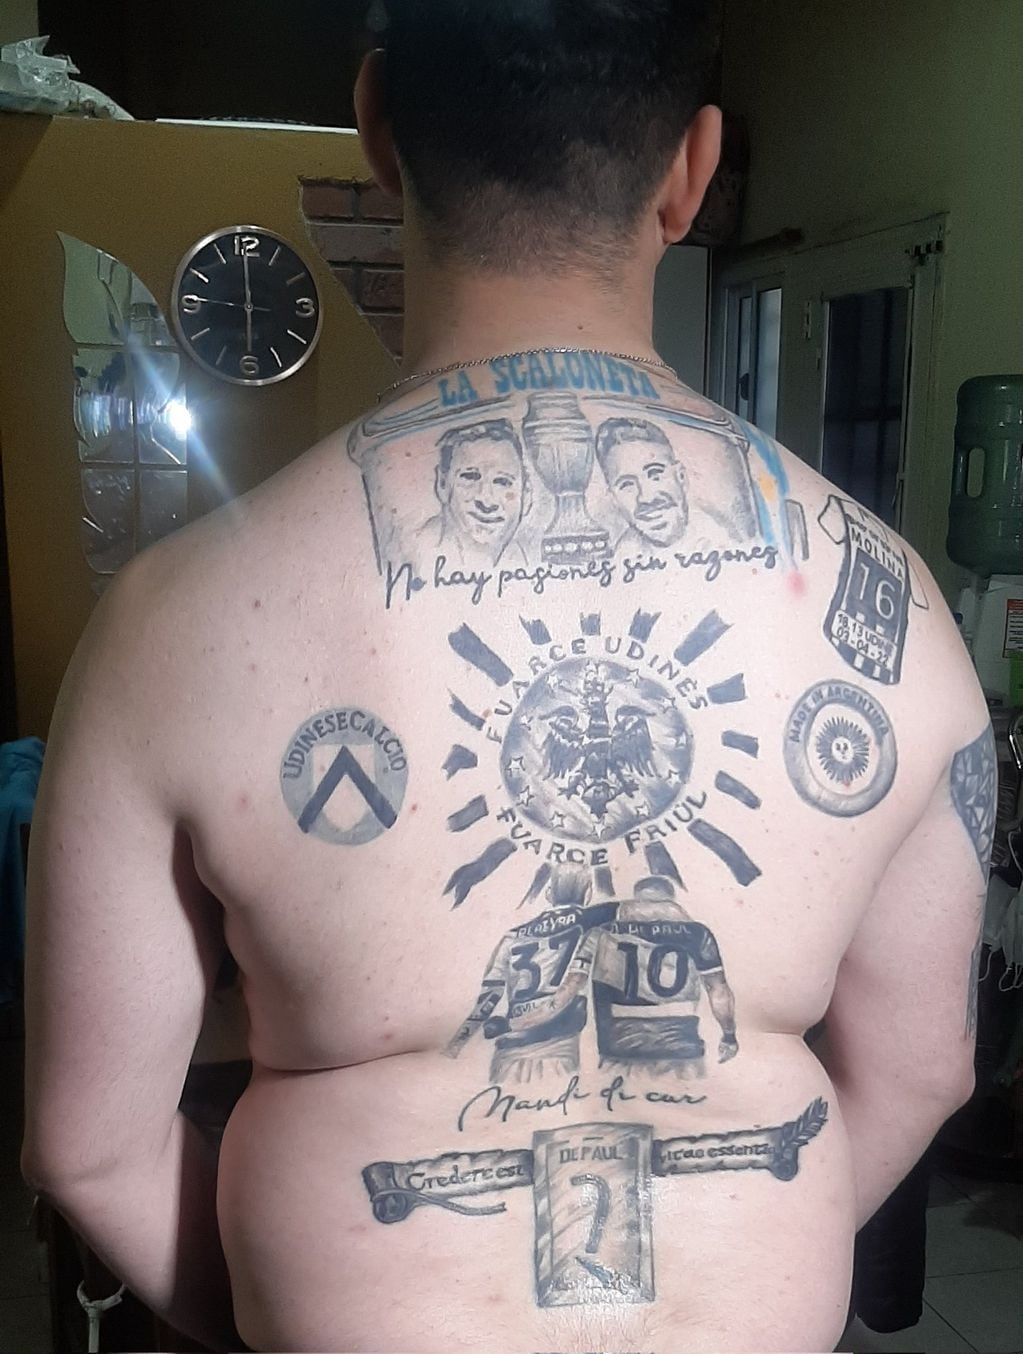 Los tatuajes del fanático de De Paul.